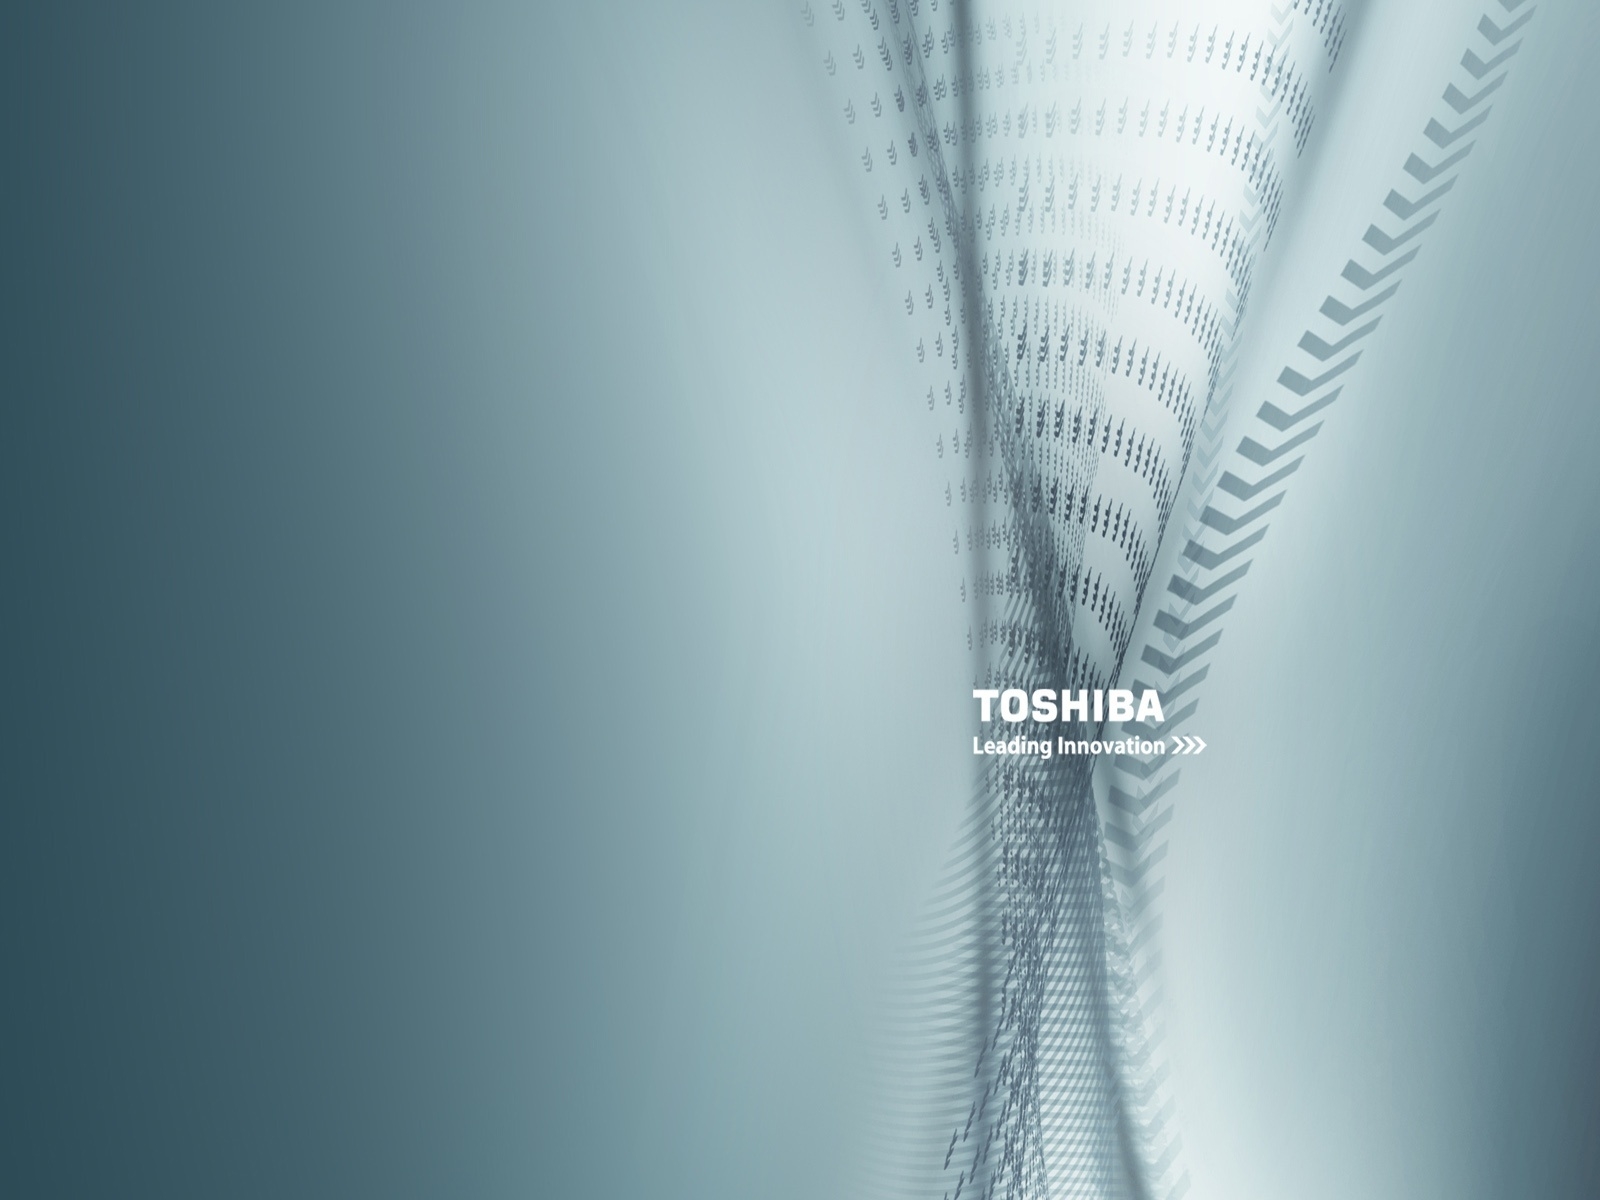 Toshiba Innovation for 1600 x 1200 resolution